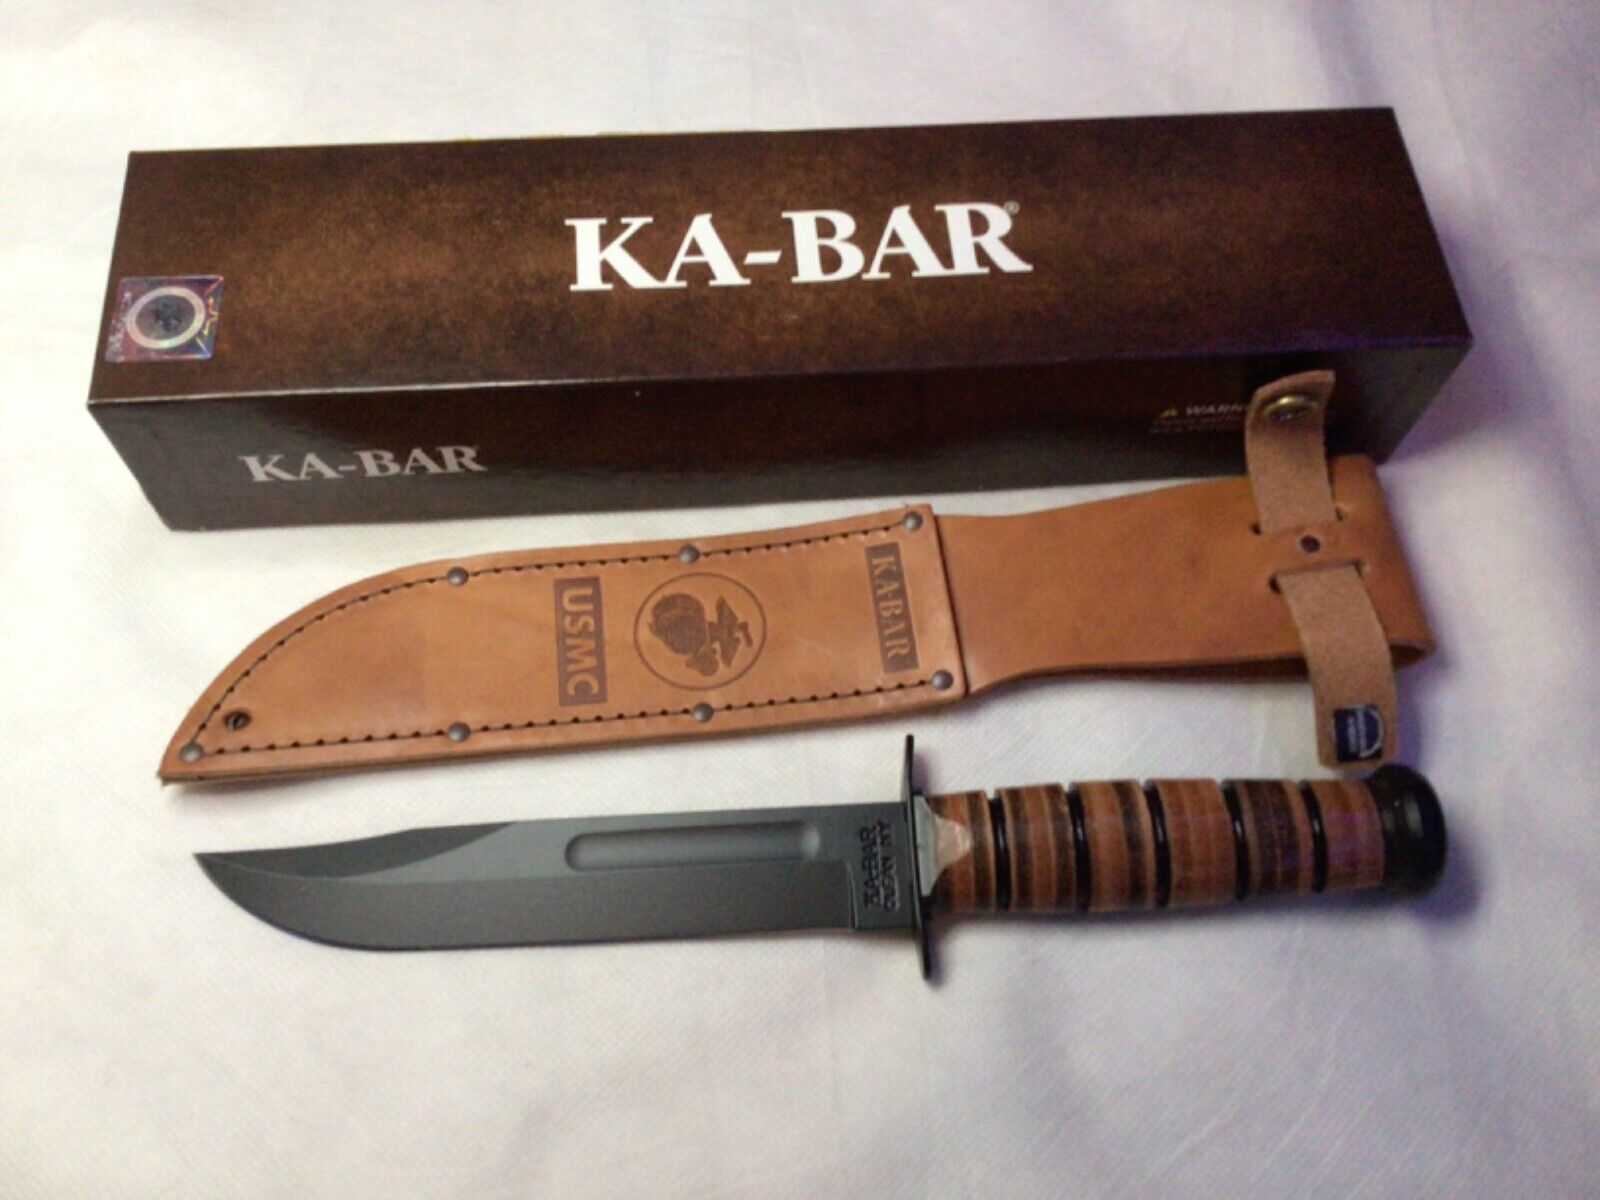 KA-BAR 1217 Fighting/Utility Knife USMC Leather Sheath Sharp Edge Made In USA